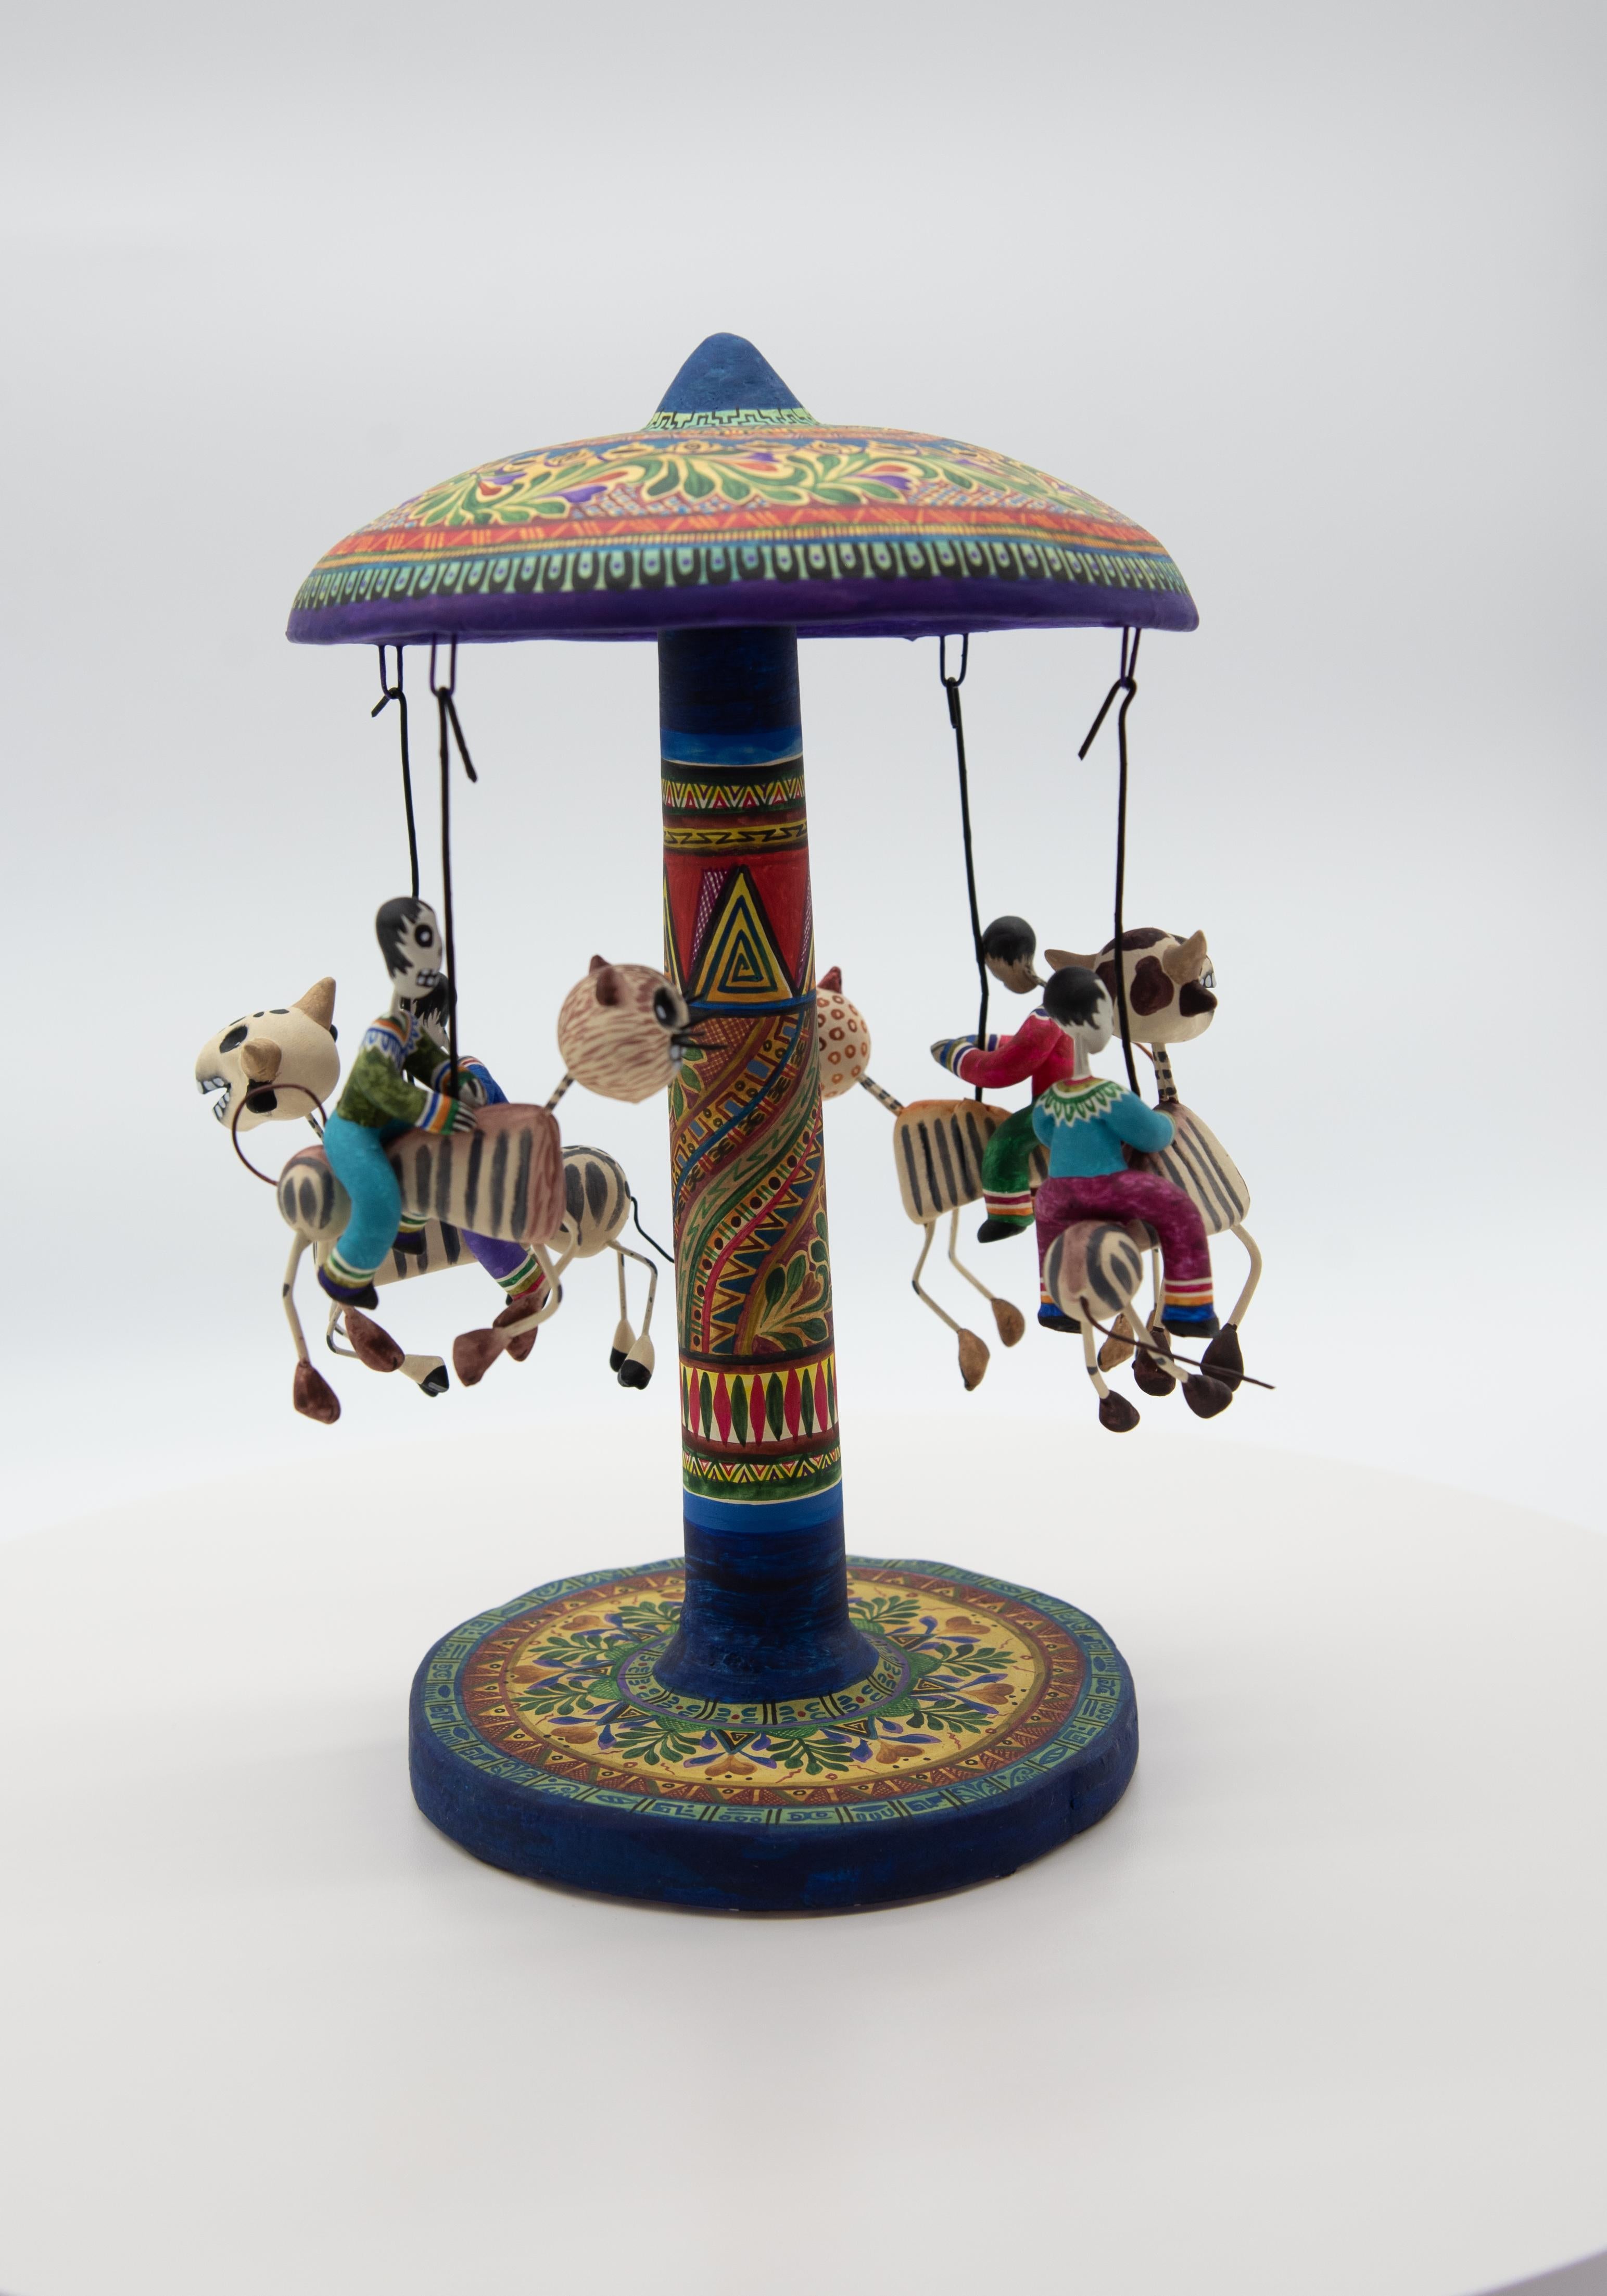 Carousel Day of the Dead Ceramic Mexican Folk Art by Familia Castillo  For Sale 7